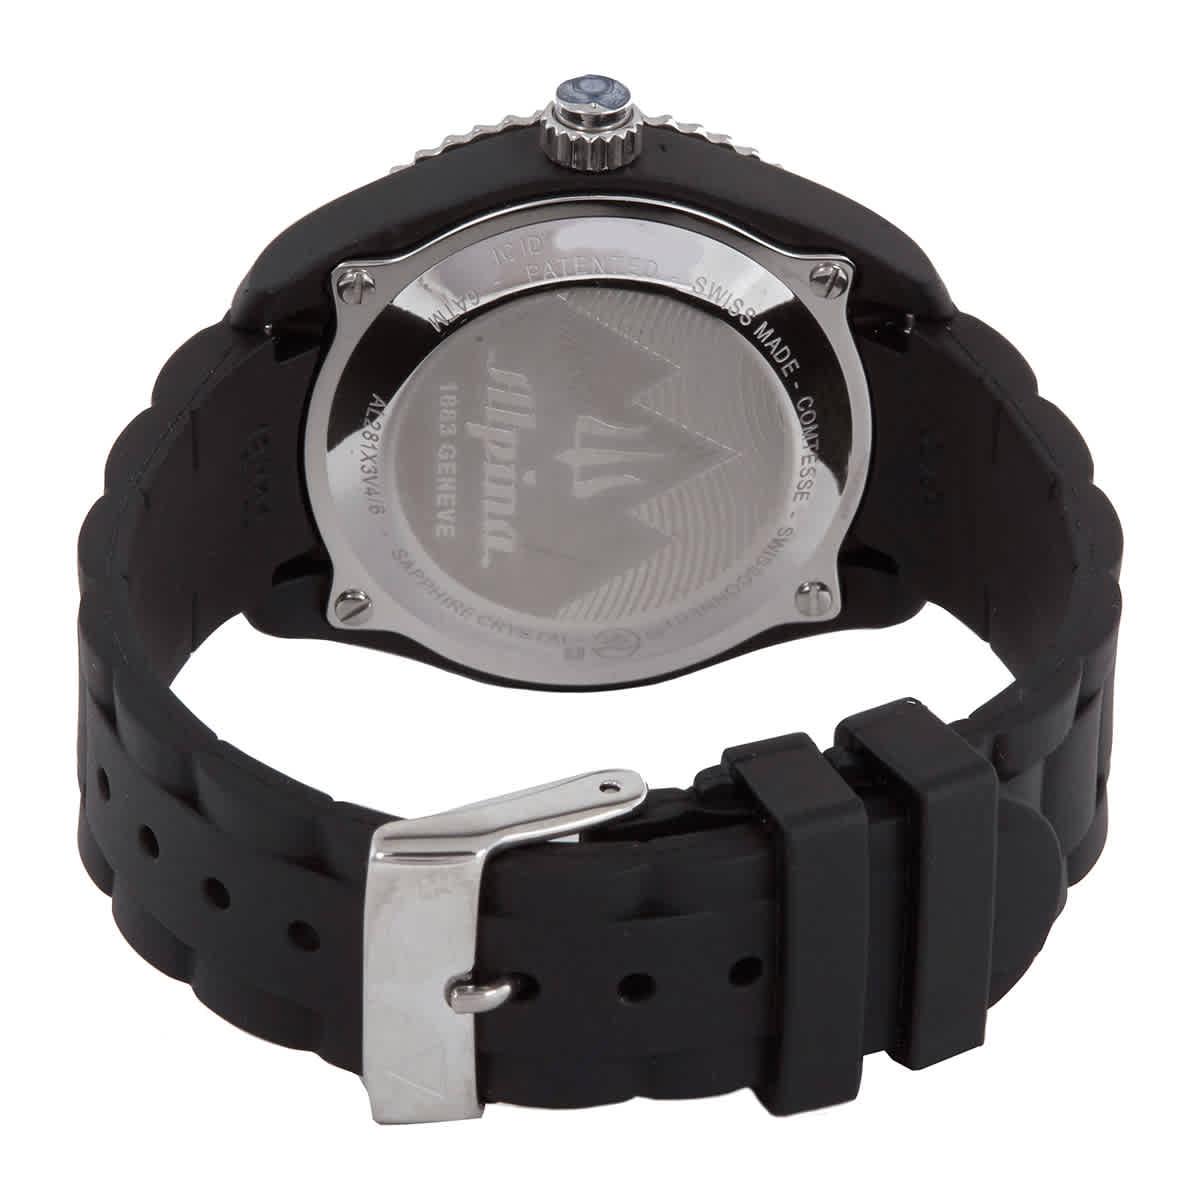 Alpina Horological Smartwatch Alarm Black Dial Watch | Lyst